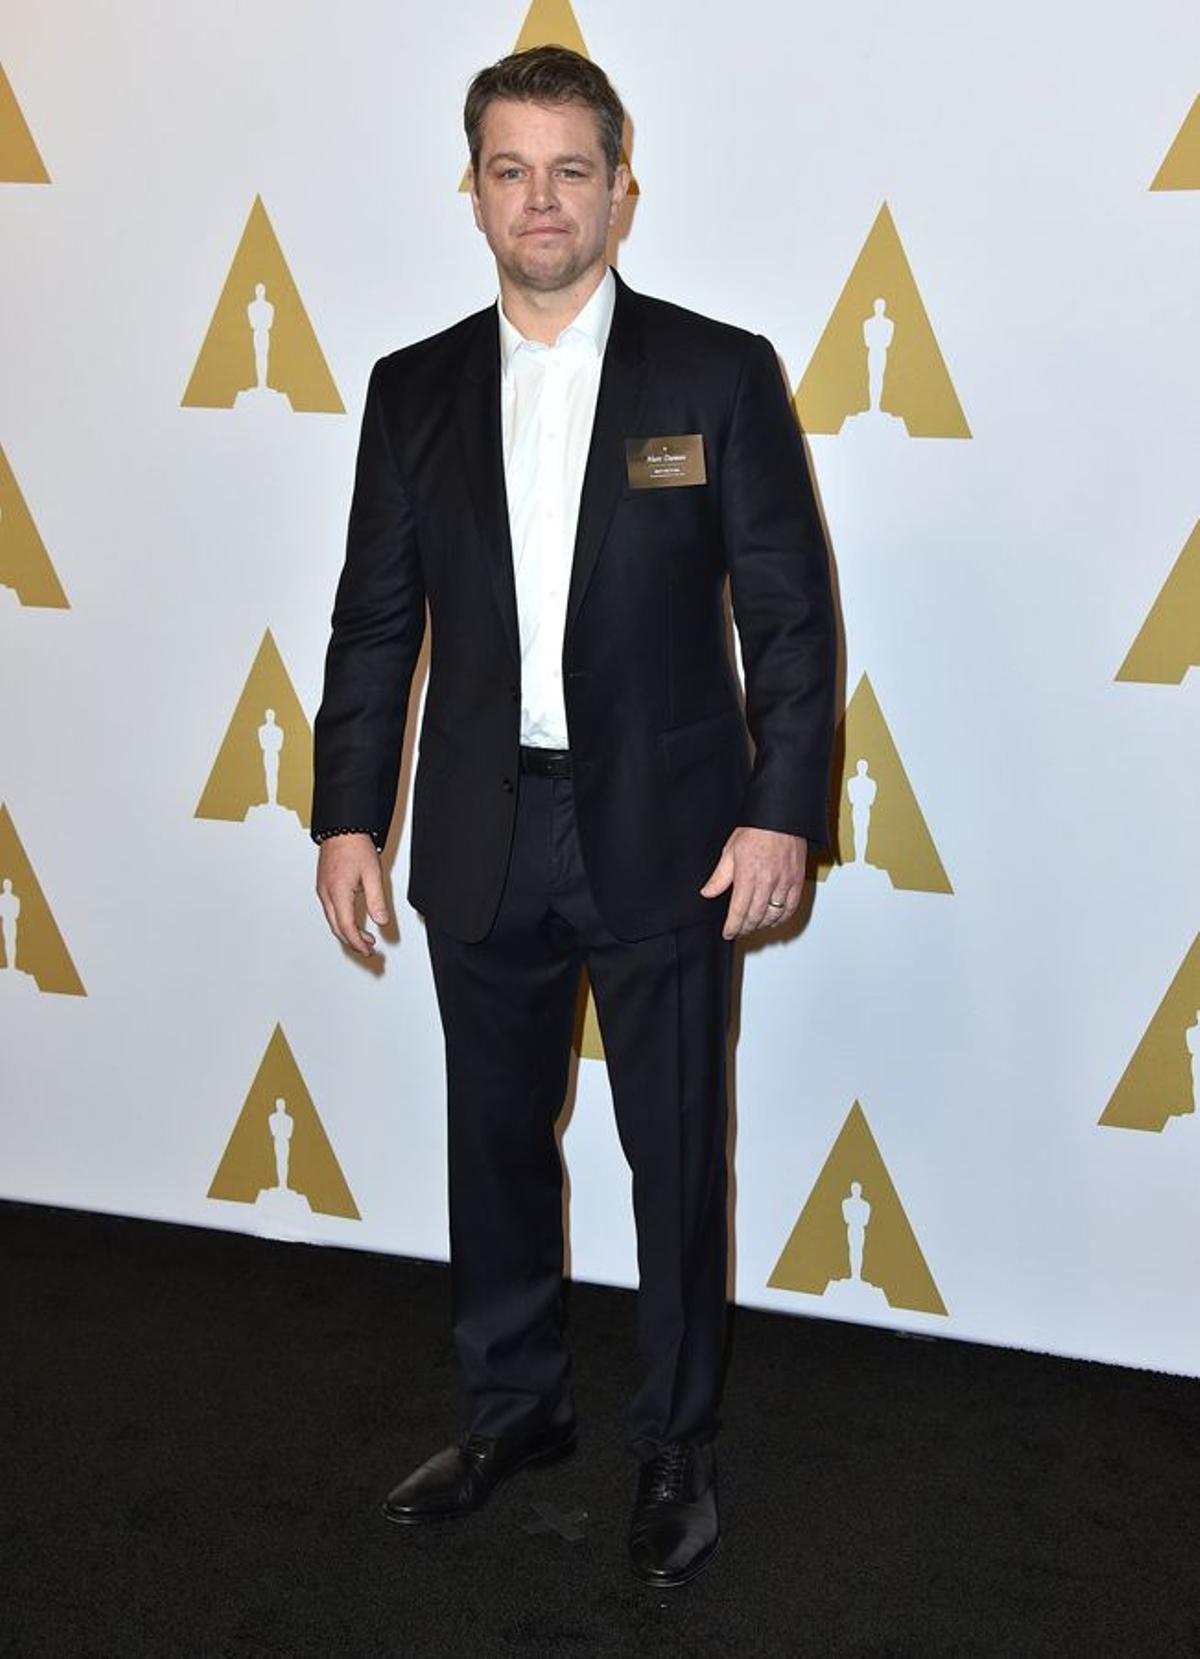 Almuerzo previo a los Oscar: Matt Damon